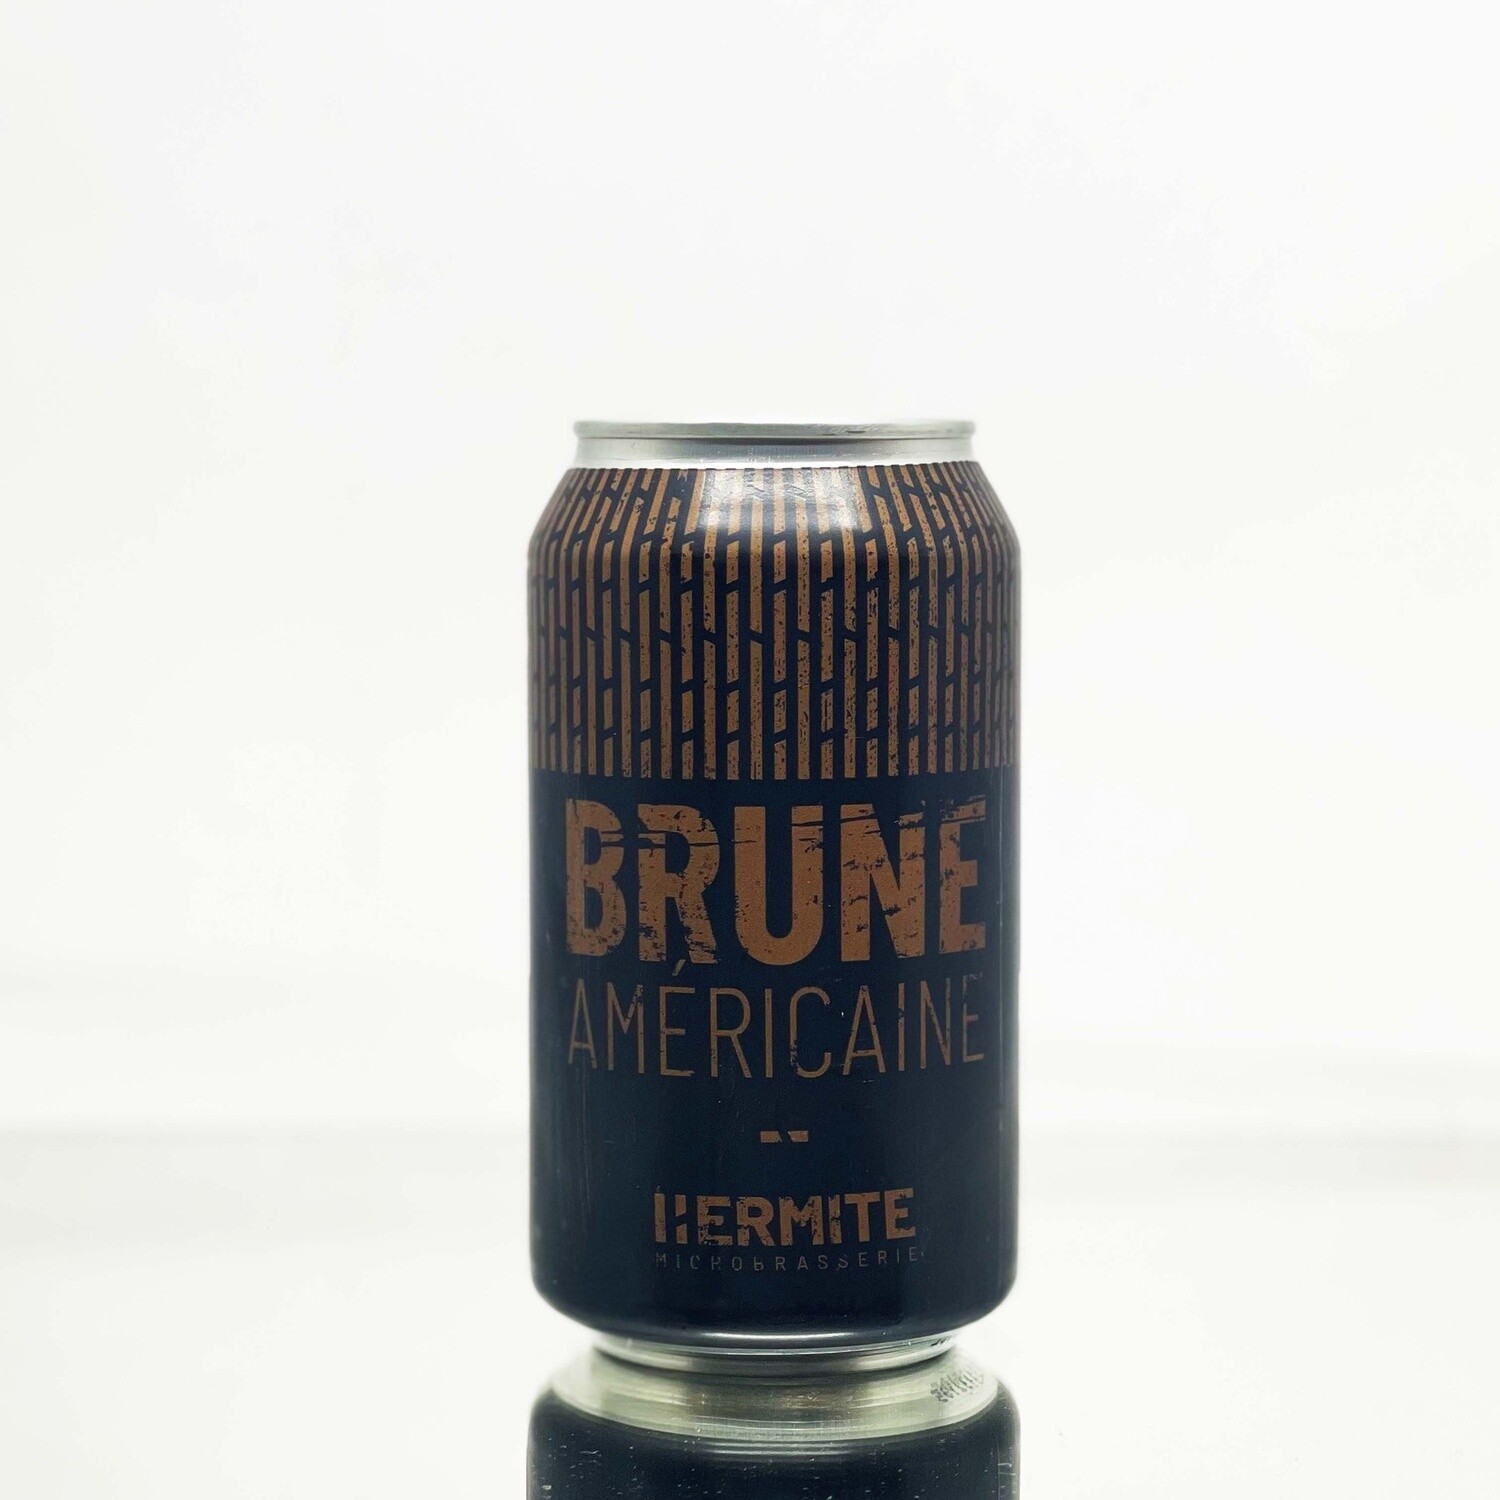 Hermite - Brune Américaine